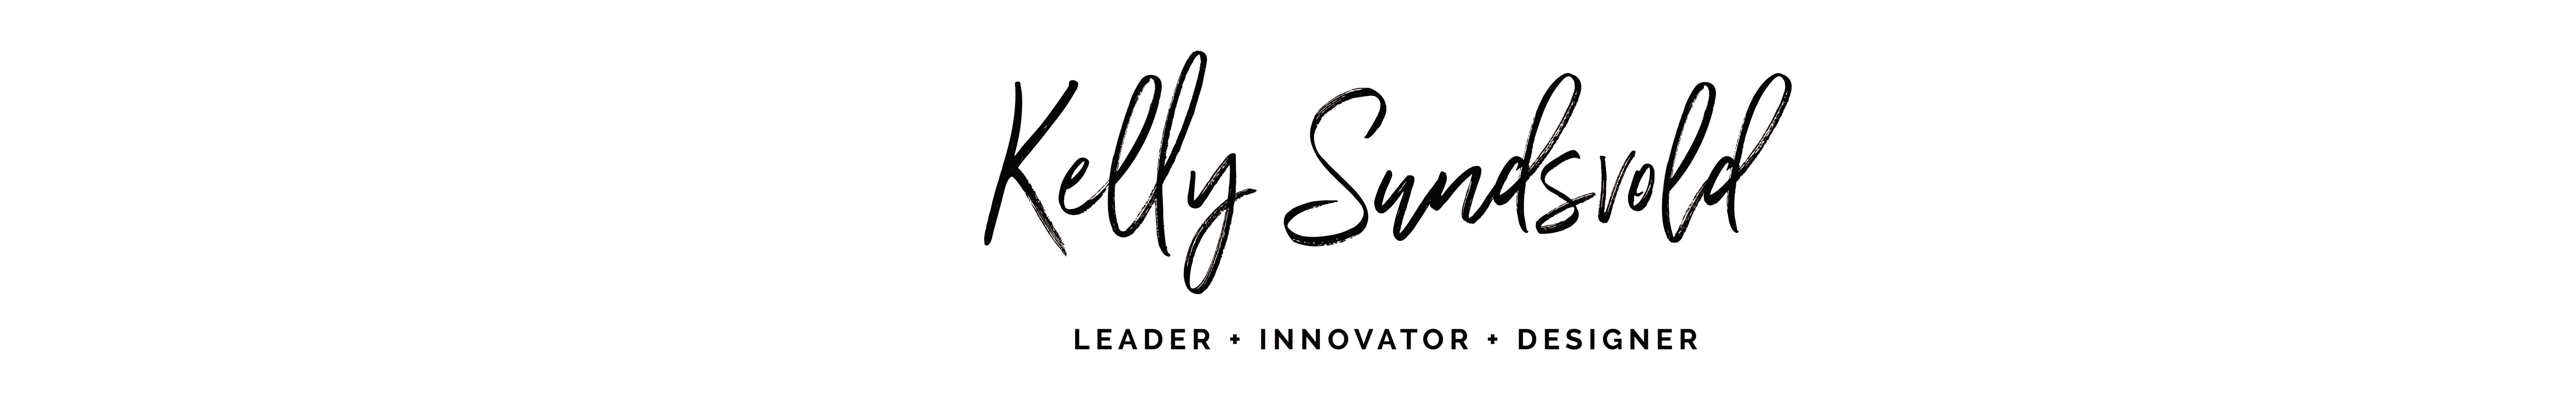 Kelly Sundsvold's profile banner